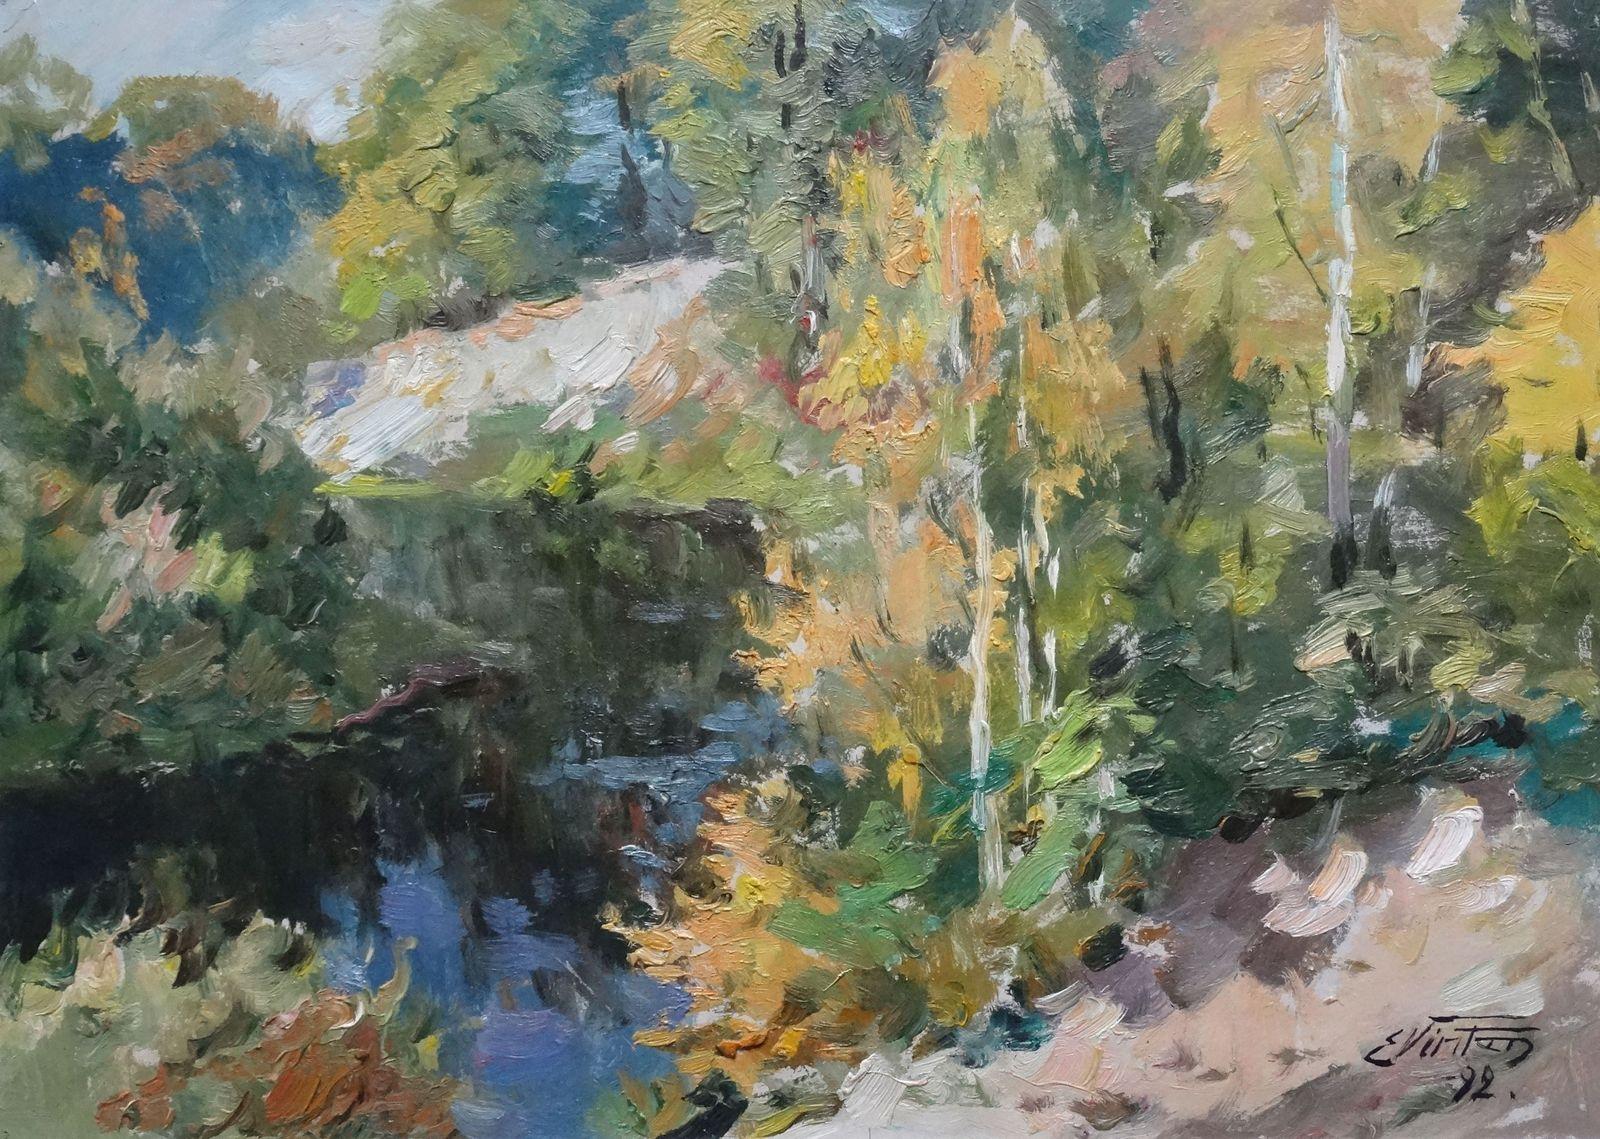 Edgars Vinters Landscape Painting - Landscape with the river. 1992, cardboard, oil, 49x68 cm